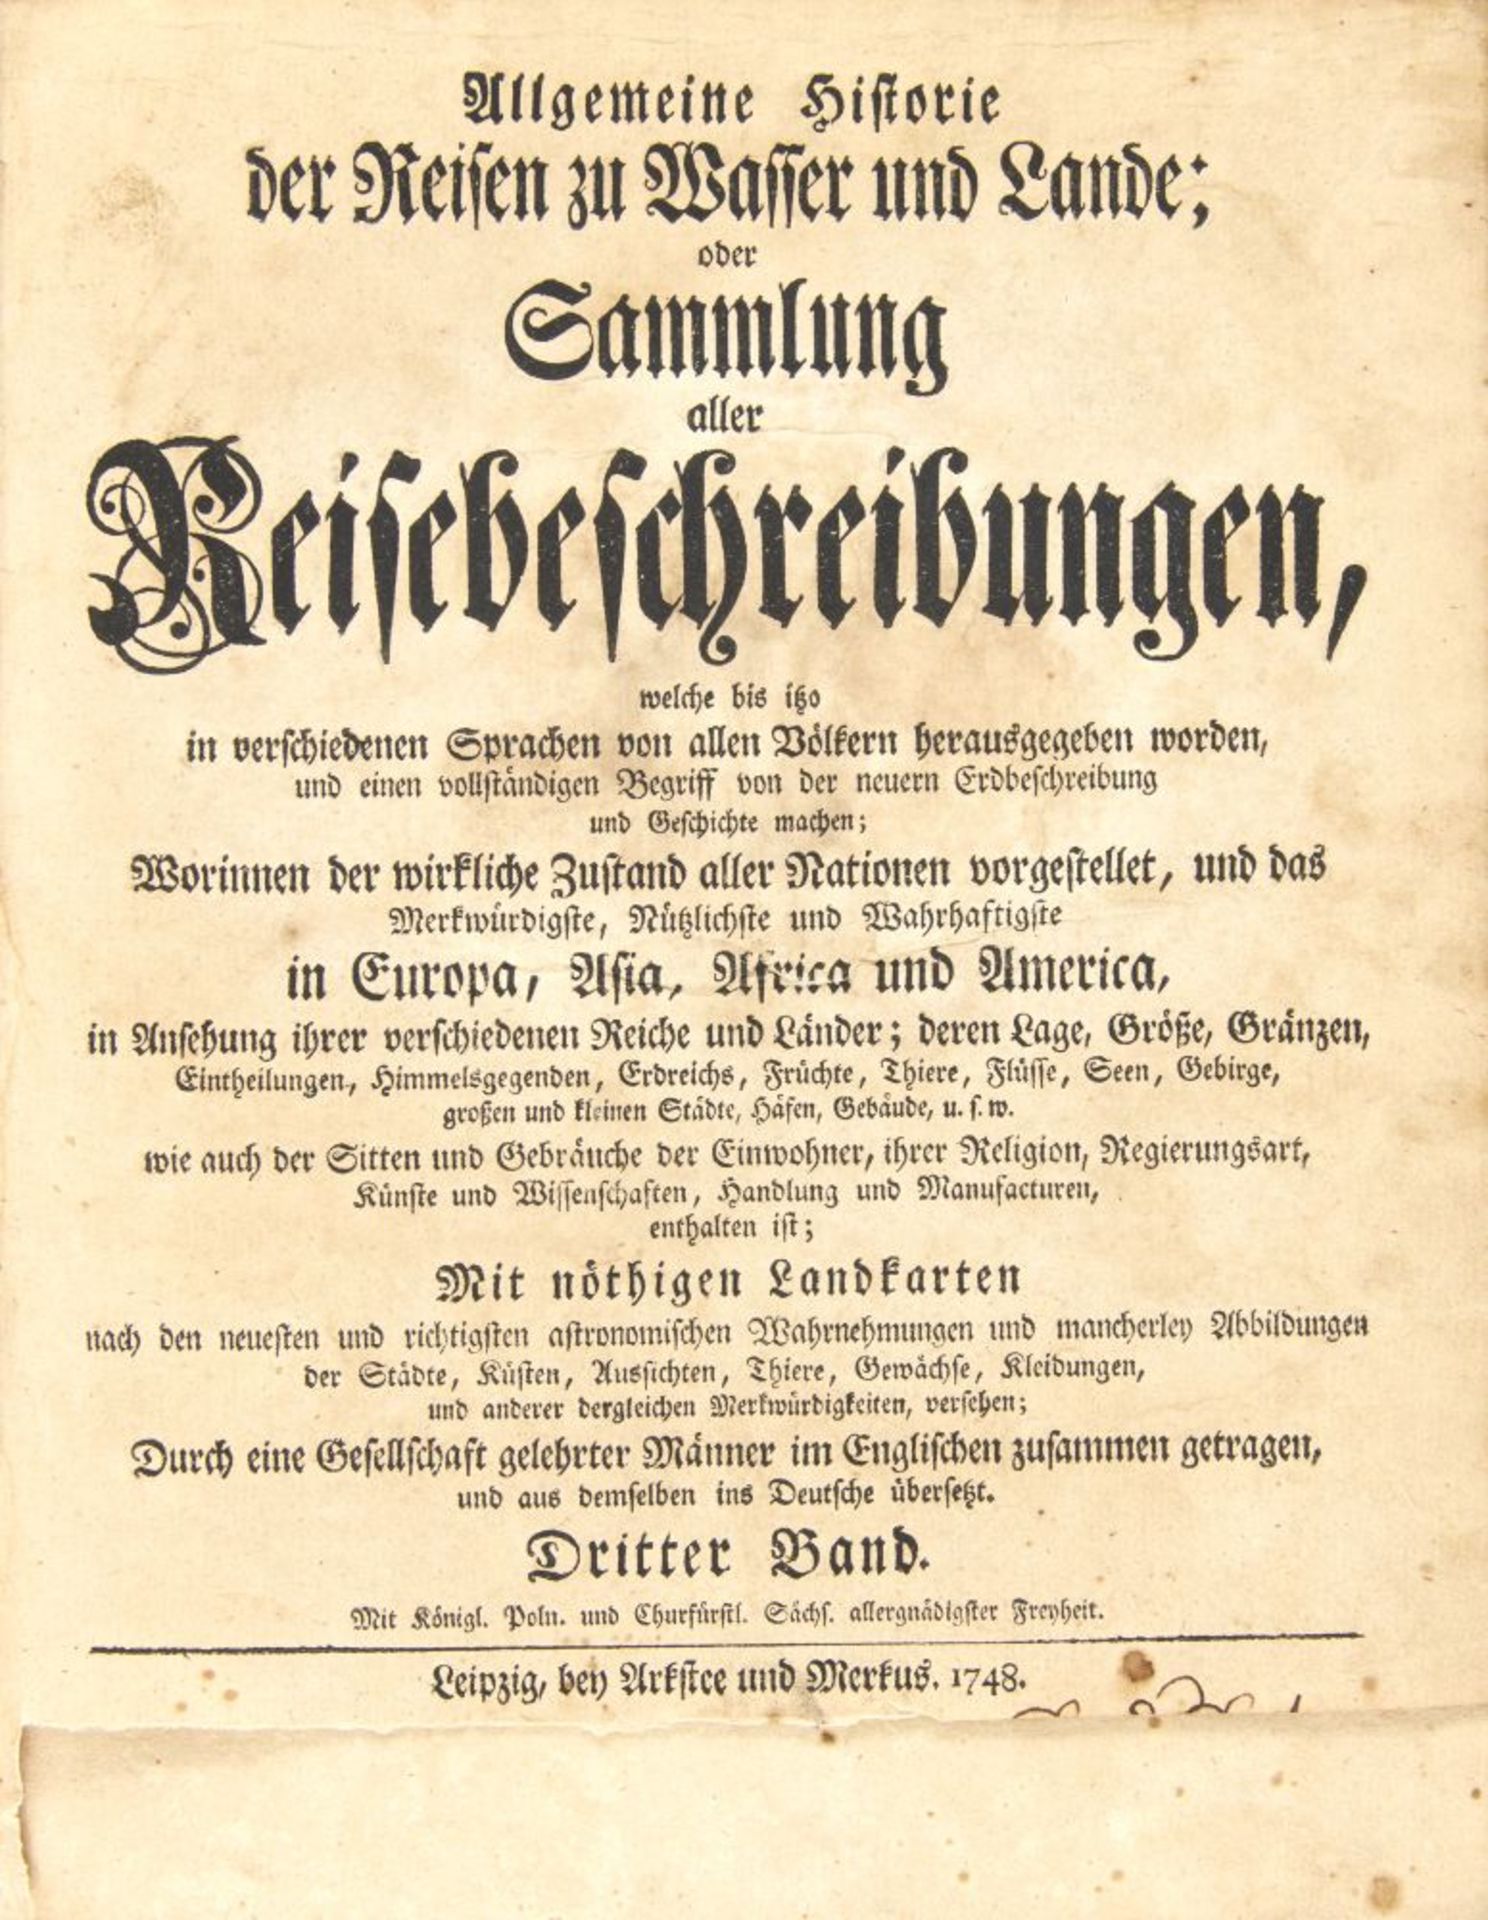 J. J. Schwabe, Reisebeschreibungen, Bd. III. Lpz 1748. - Image 2 of 3